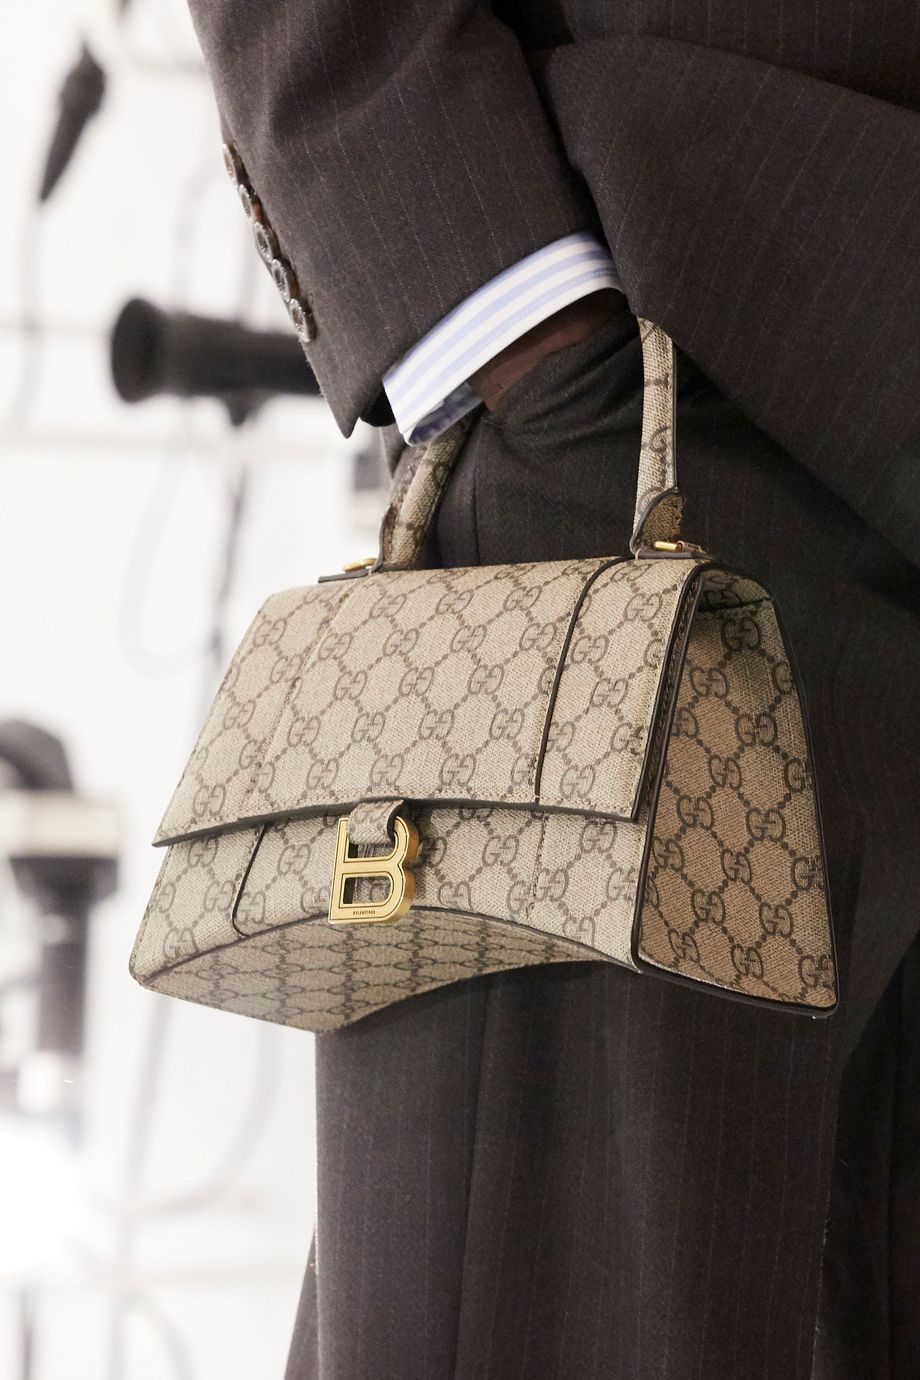 Don't Call Gucci's Work With Balenciaga a 'Collaboration